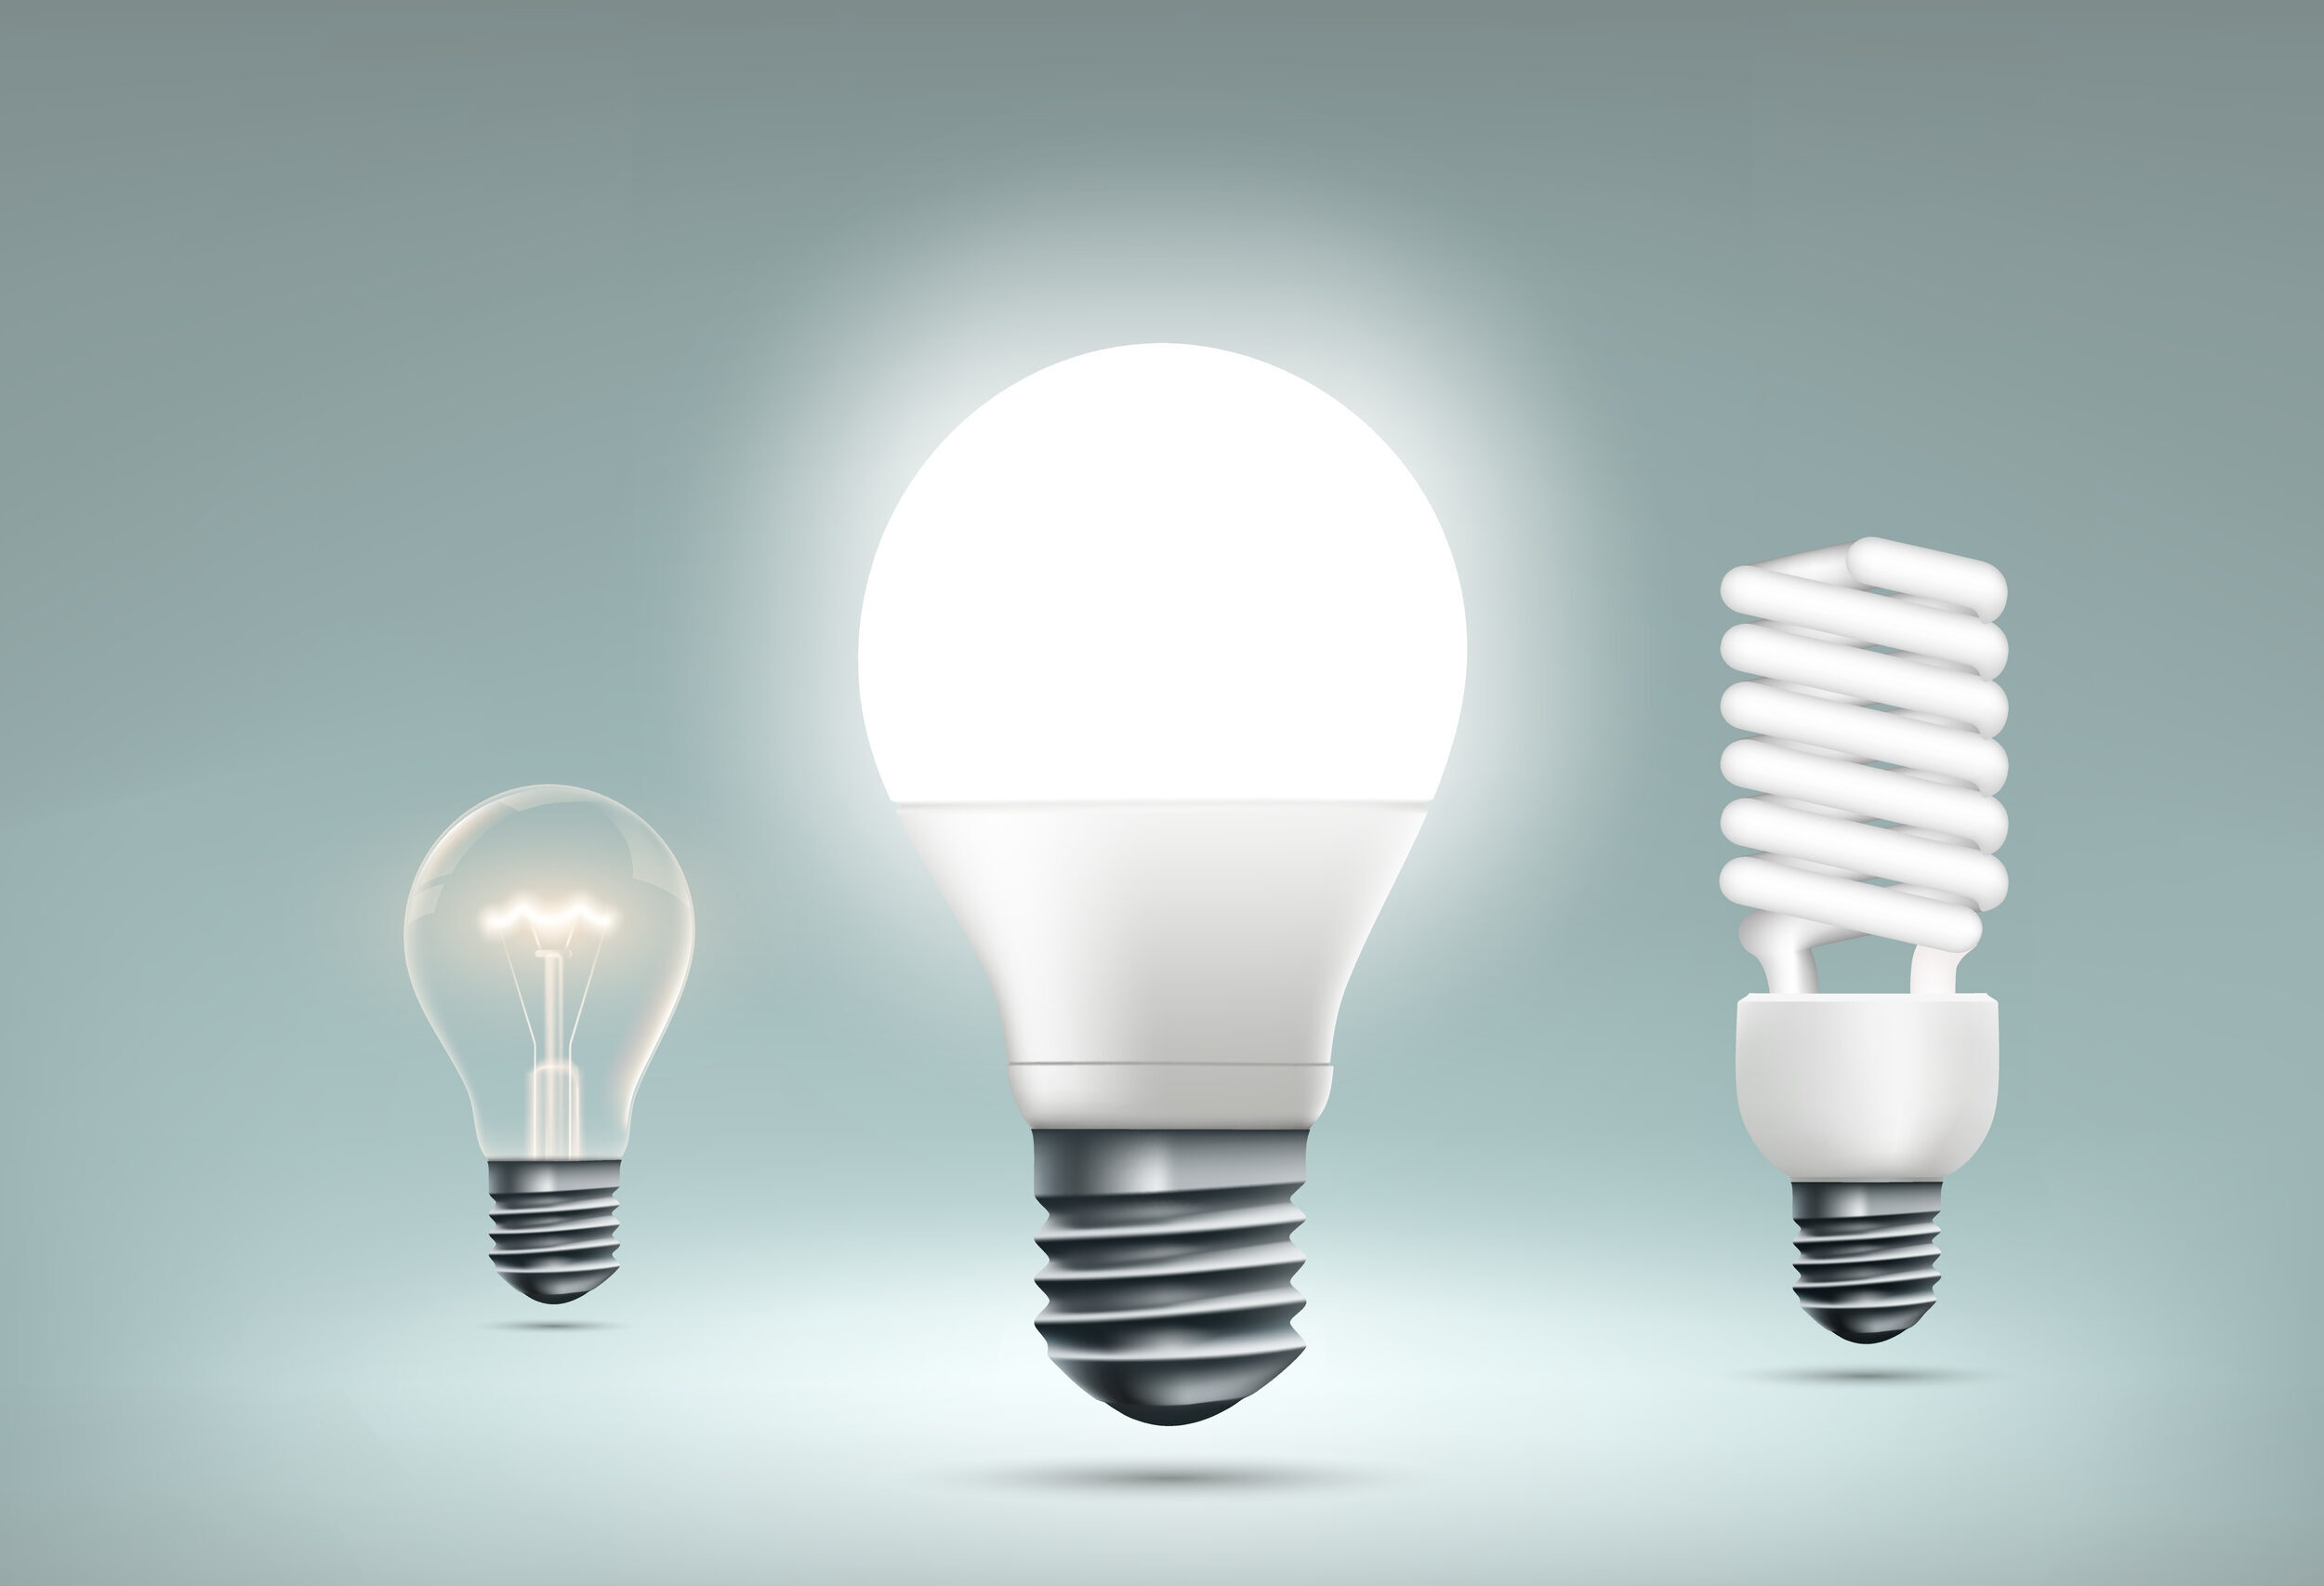 Led,,Incandescent,And,Energy,Saving,Light,Bulbs.,Vector,Illustration